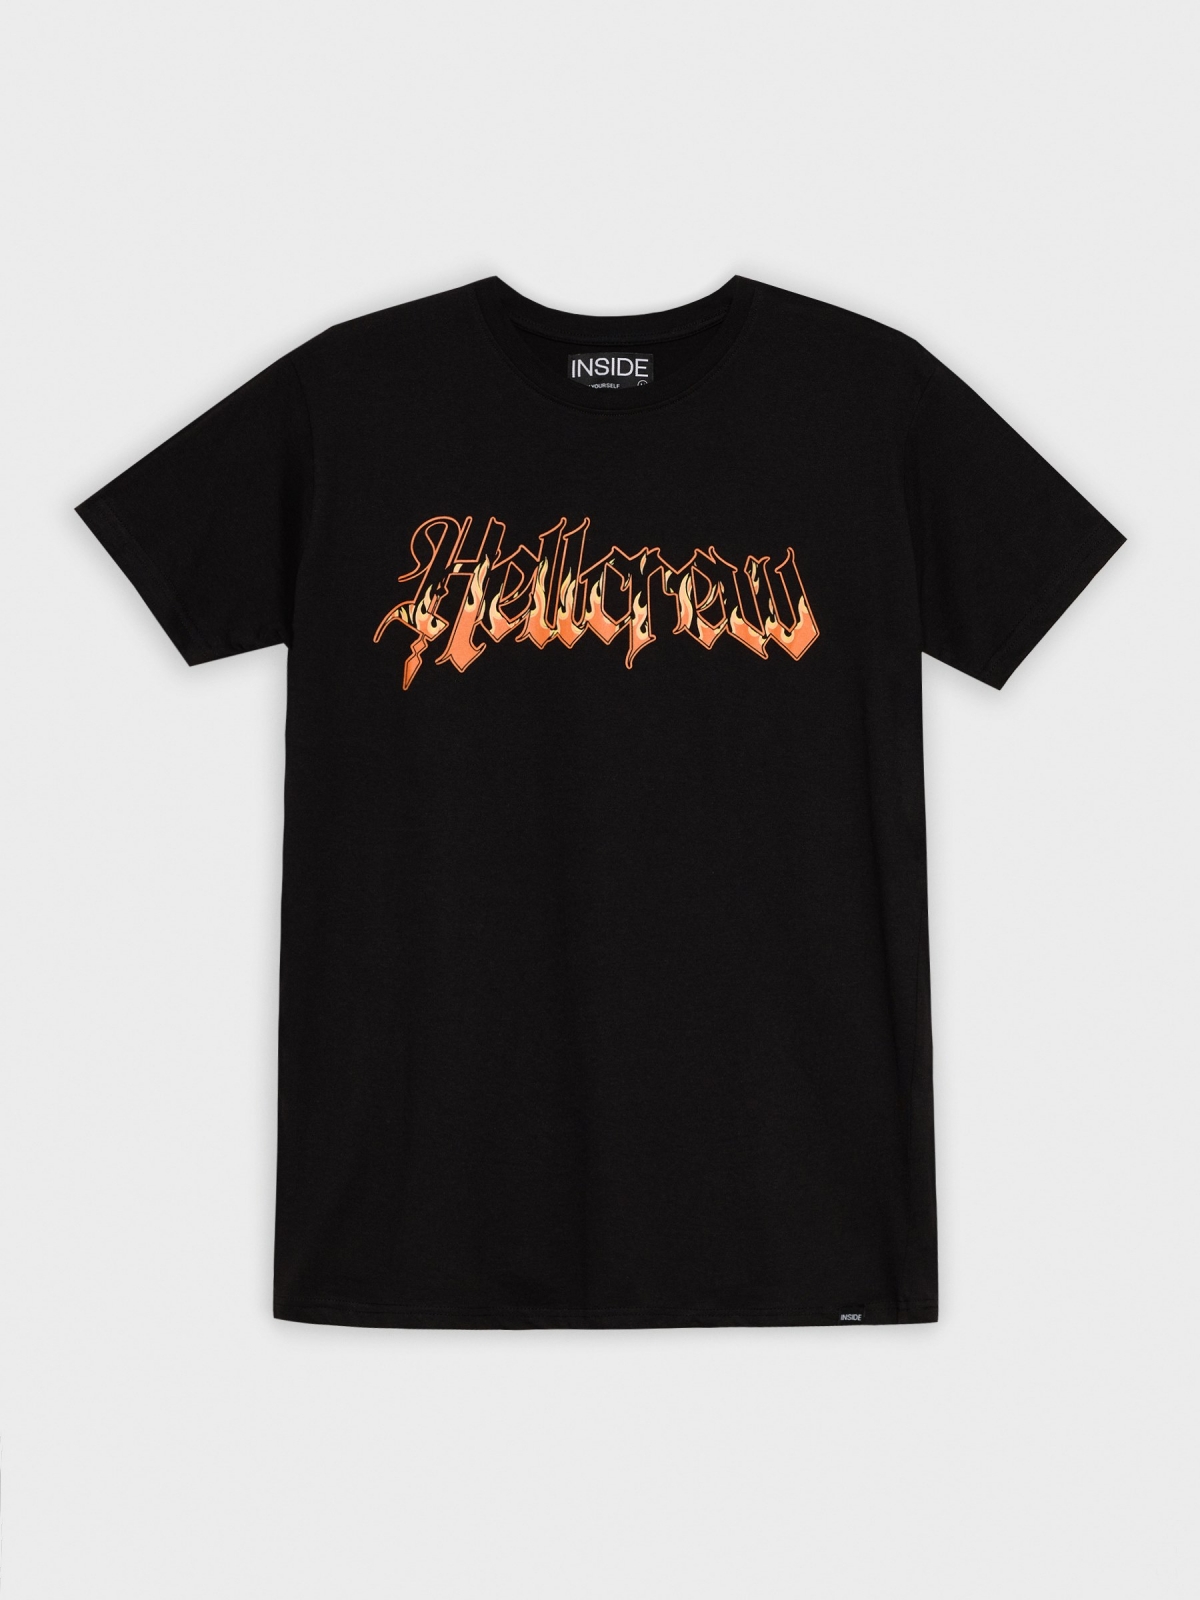  Camiseta Hell negro